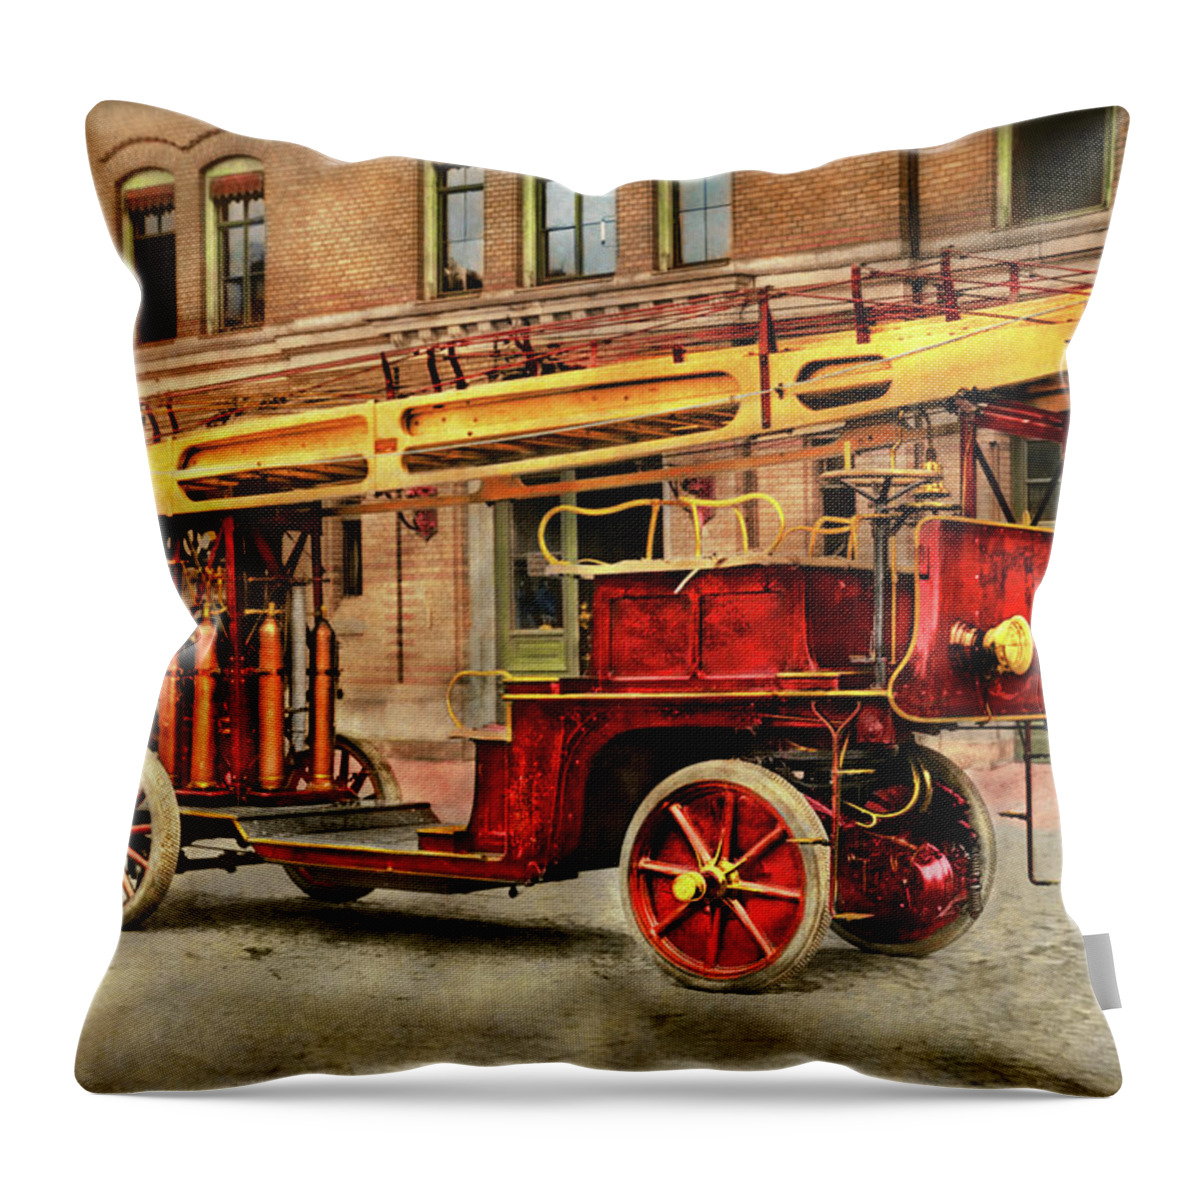 Fireman Art Throw Pillow featuring the photograph Fire Truck - An electric ladder truck 1907 by Mike Savad